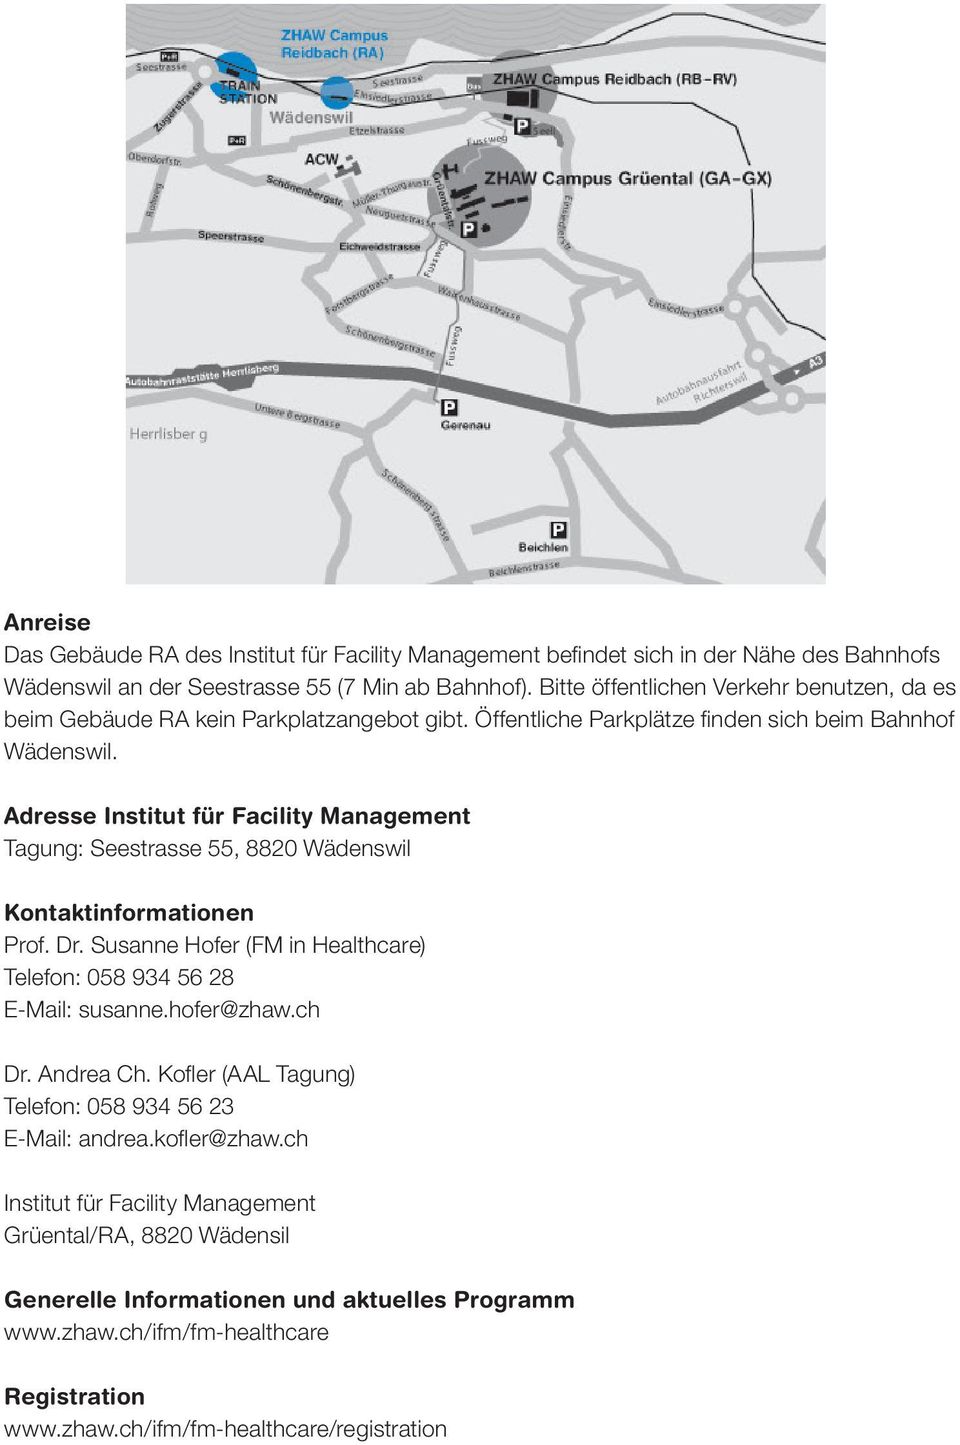 Adresse Institut für Facility Management Tagung: Seestrasse 55, 8820 Wädenswil Kontaktinformationen Prof. Dr. Susanne Hofer (FM in Healthcare) Telefon: 058 934 56 28 E-Mail: susanne.hofer@zhaw.